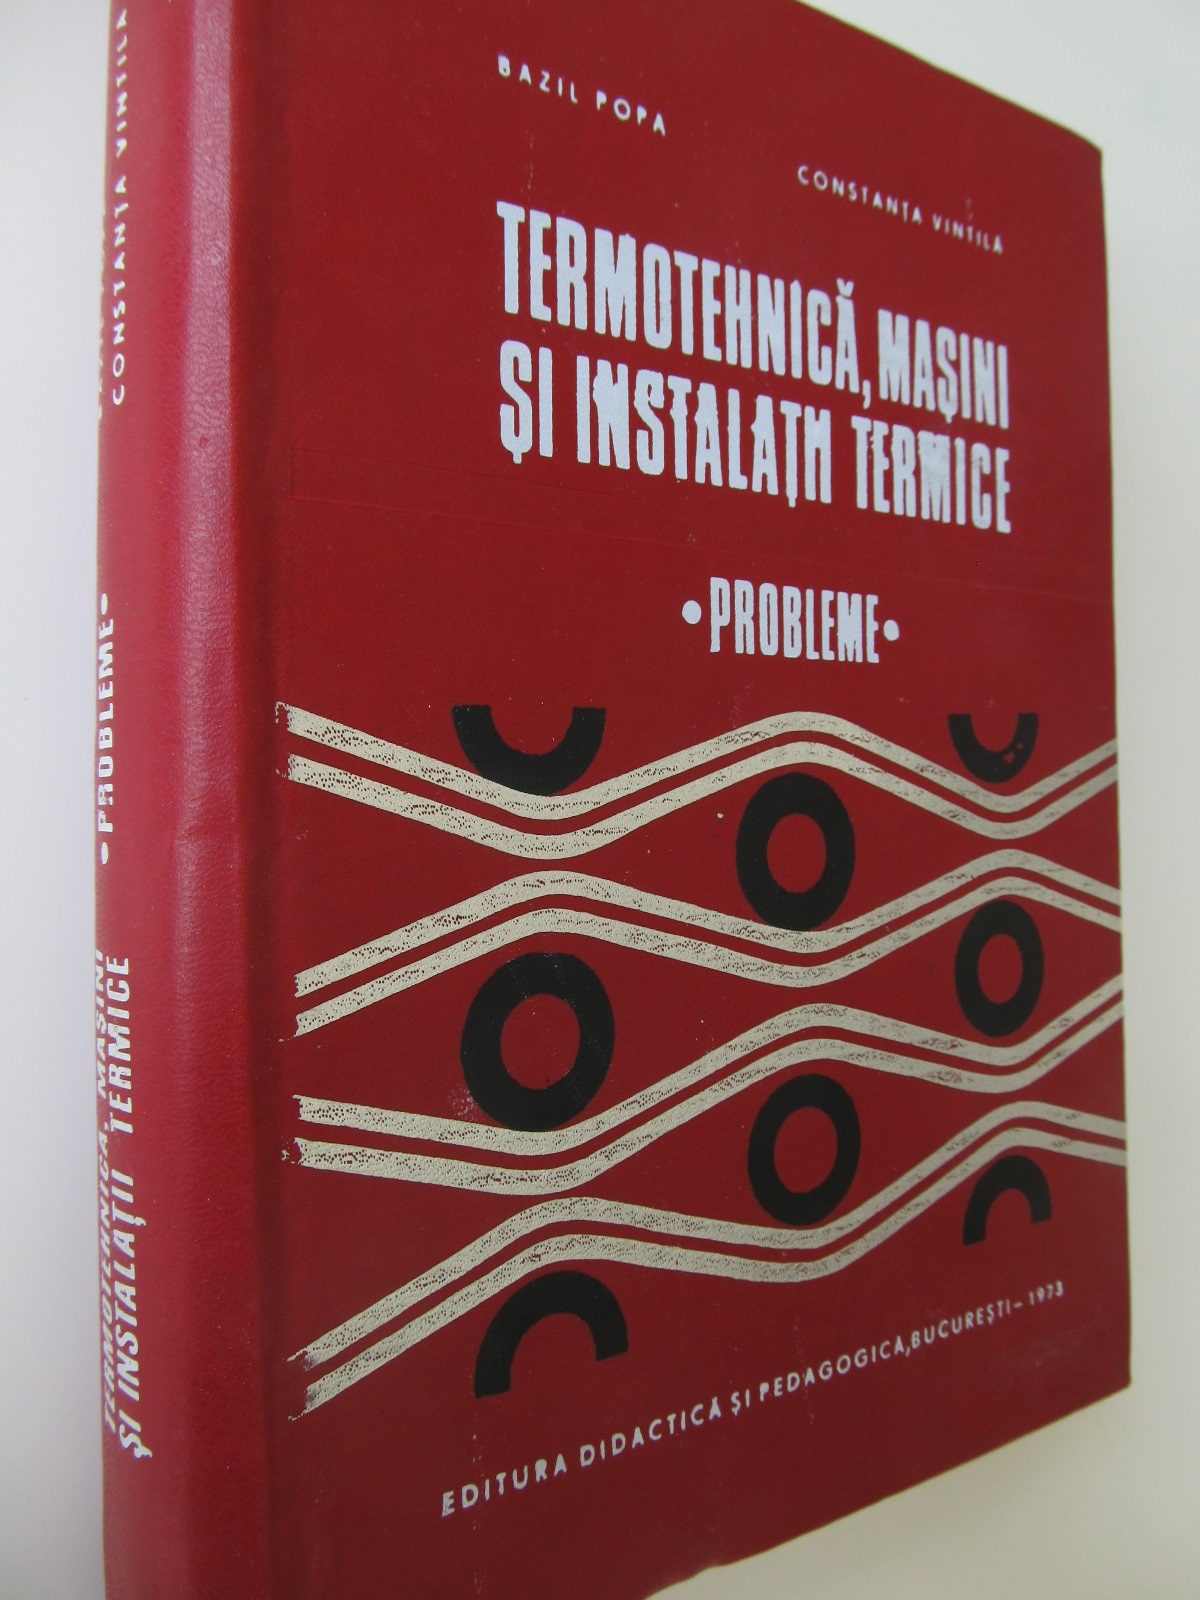 Termotehnica , masini , si instalatii termice - Probleme - Bazil Popa , Constanta Vintila | Detalii carte